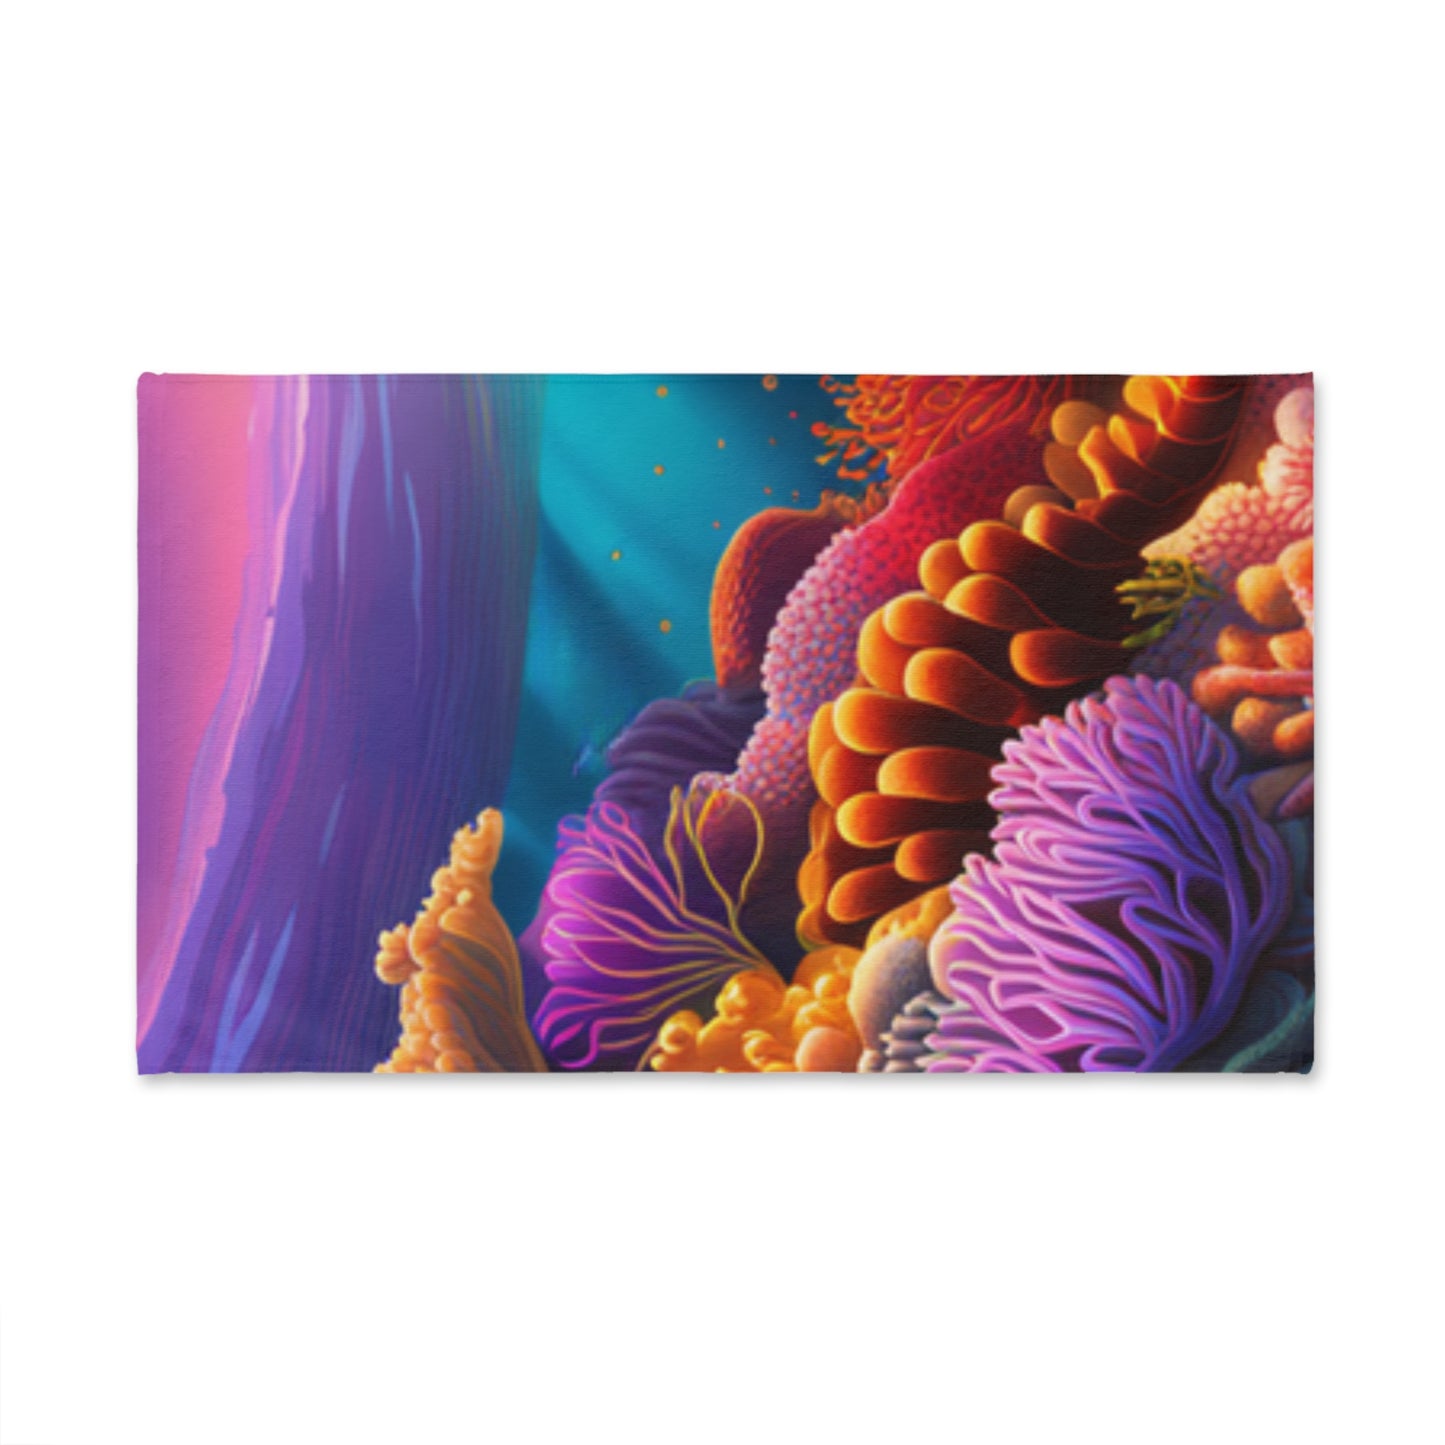 Hand Towel - Coral Reef Hand Towel